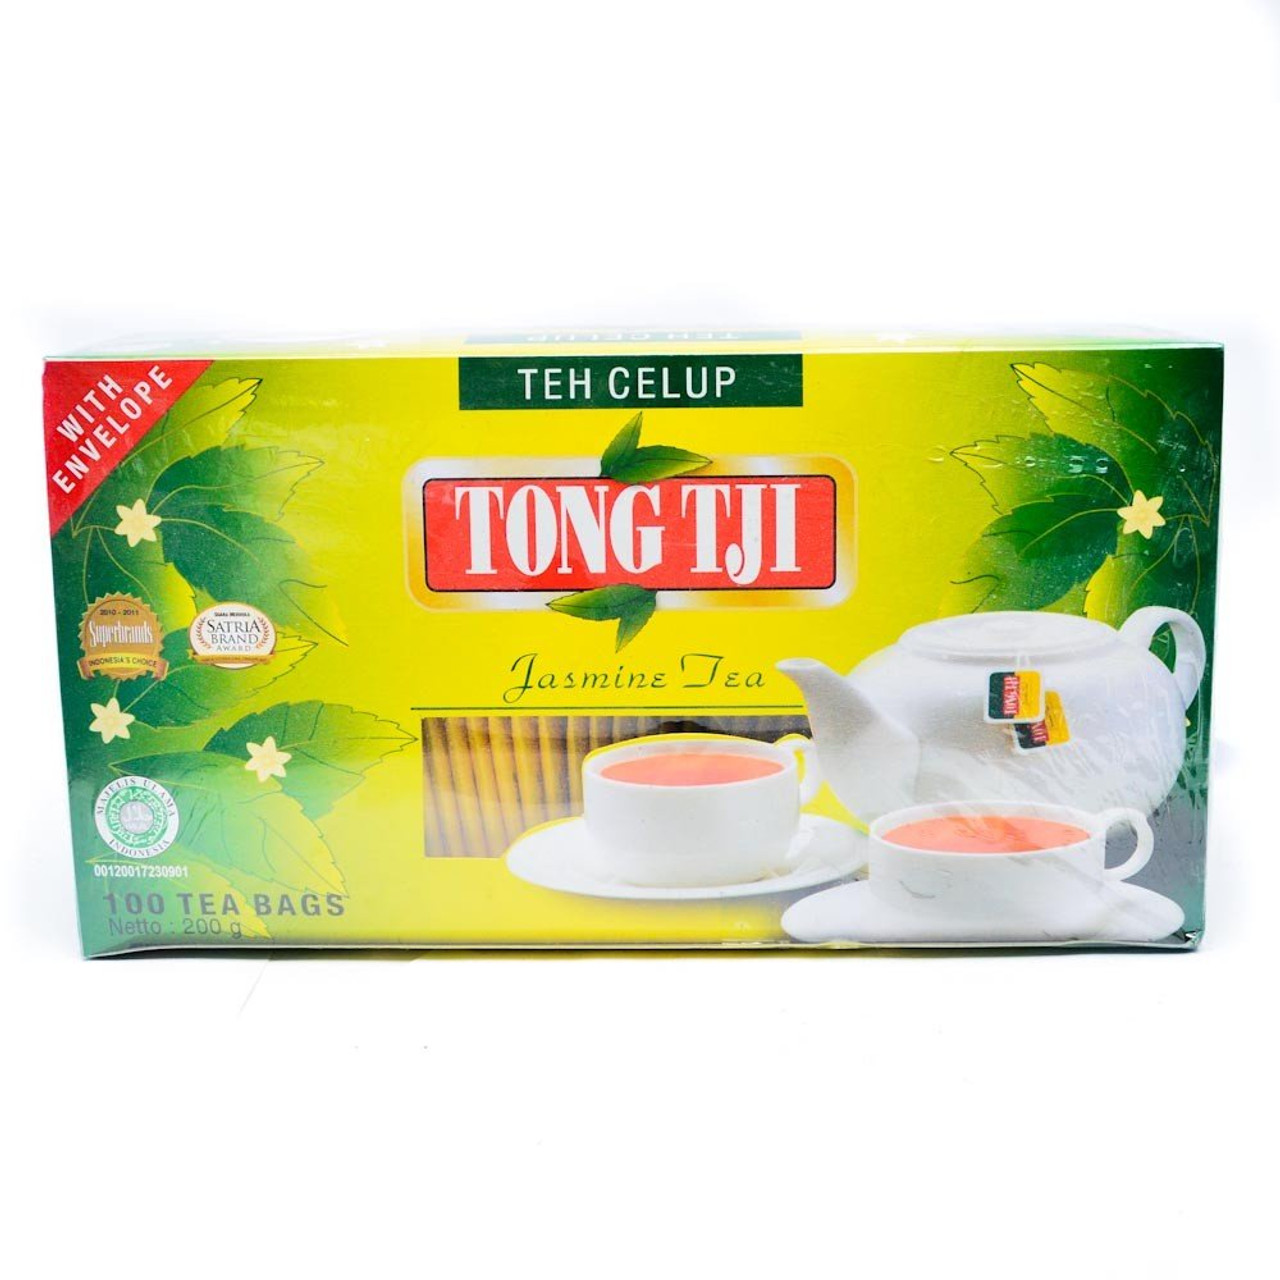 Tong Tji jasmine Tea 100-ct, with Envelope 